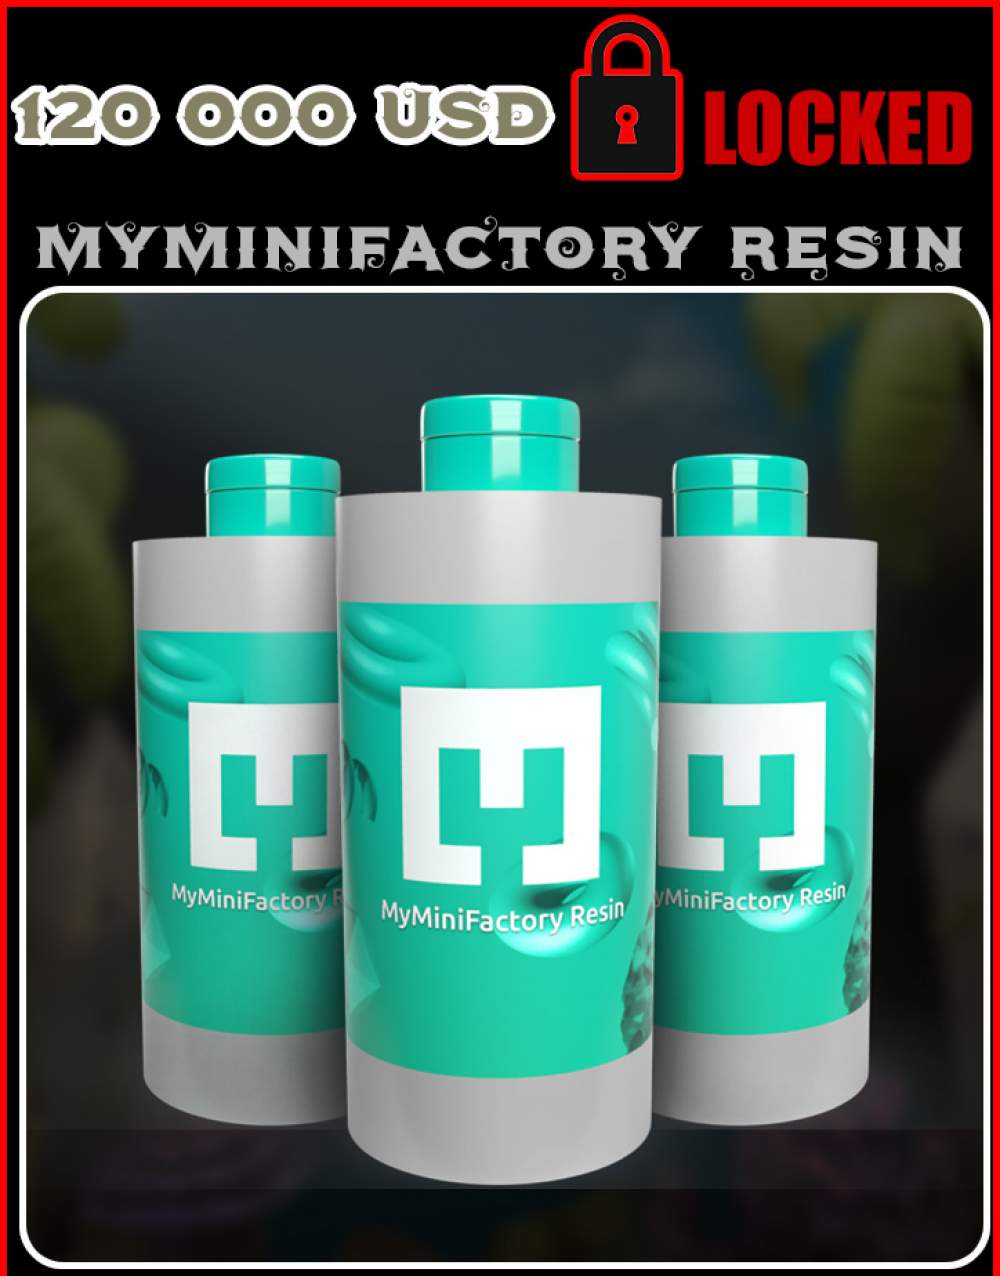 MyMiniFactory Branded Resin